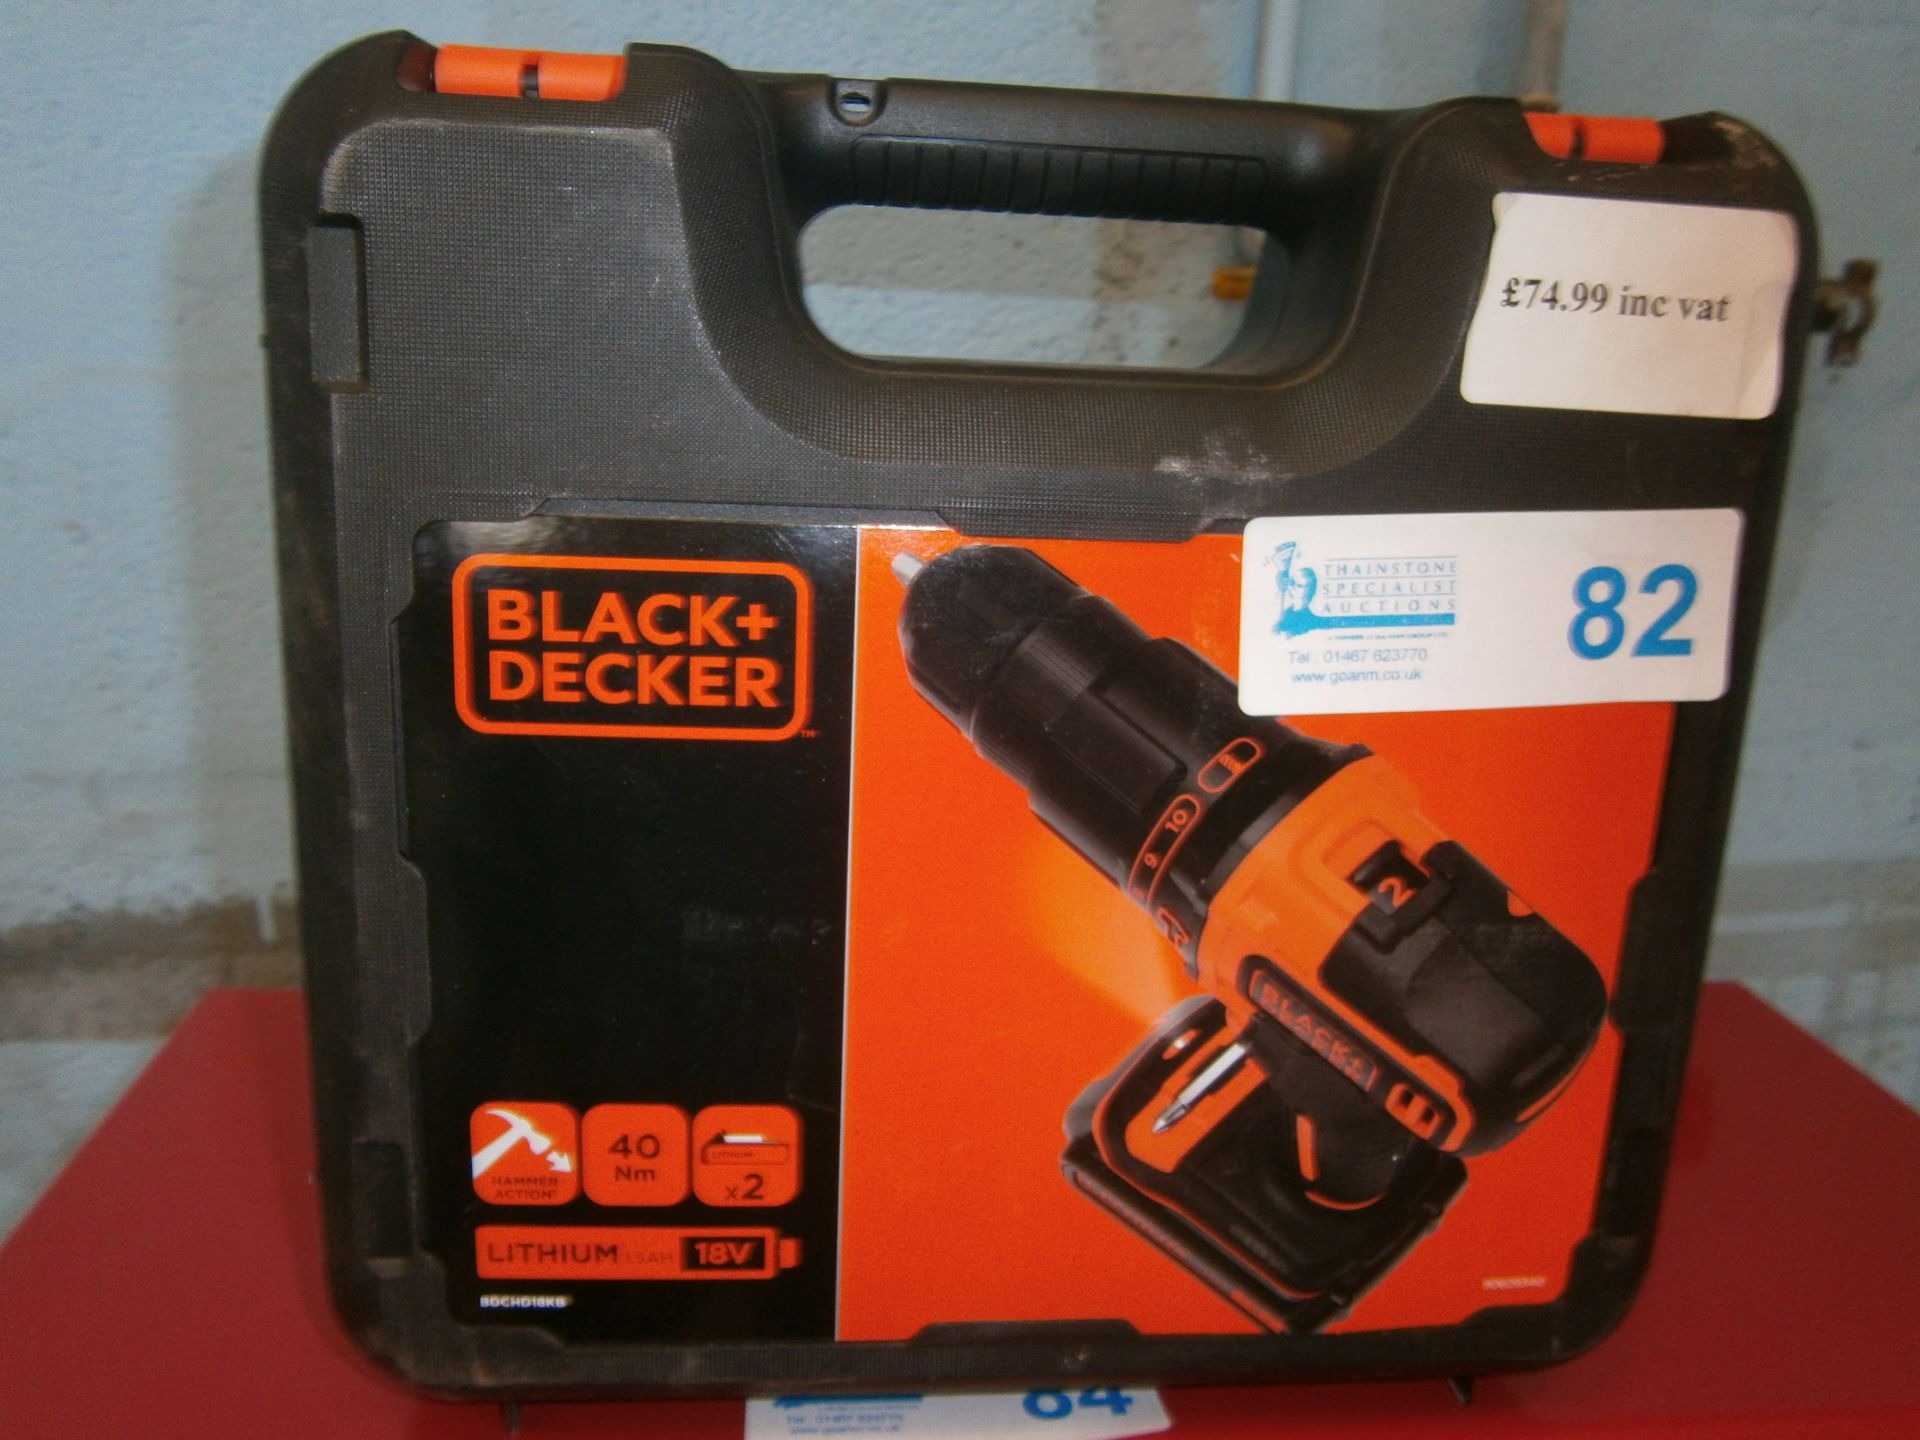 Black And Decker 18v Cordless Drill/Driver